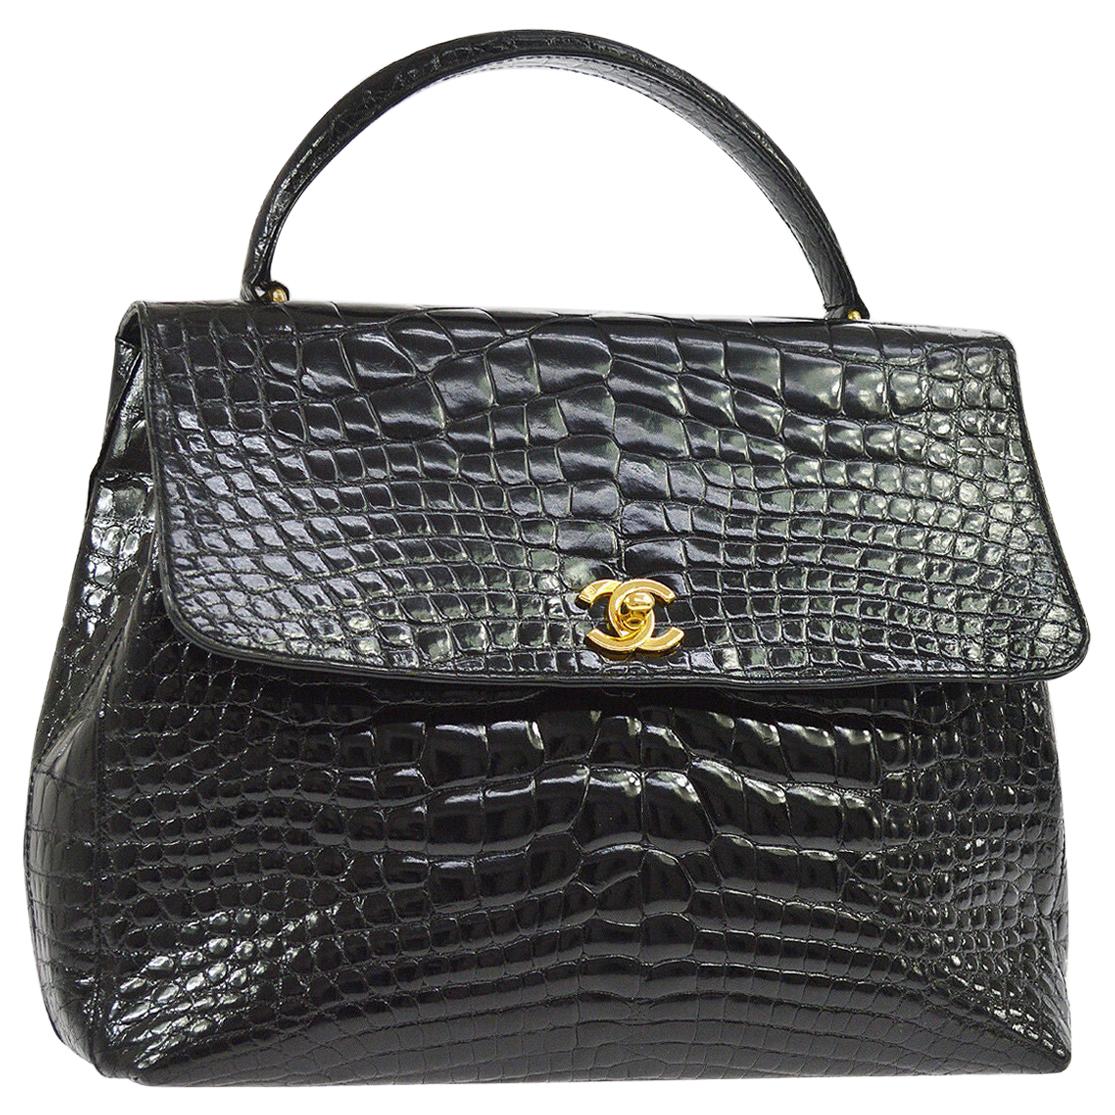 Chanel Black Crocodile Exotic Leather Gold Evening Kelly Top Handle Satchel Bag